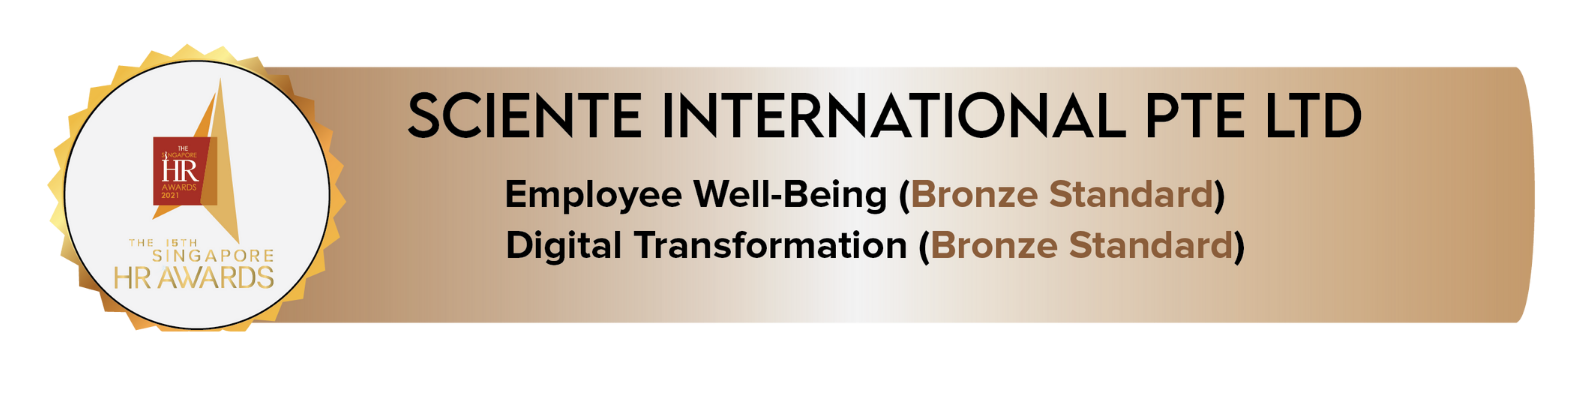 Sciente International is awarded the Bronze standard for Digital Transformation in 2021